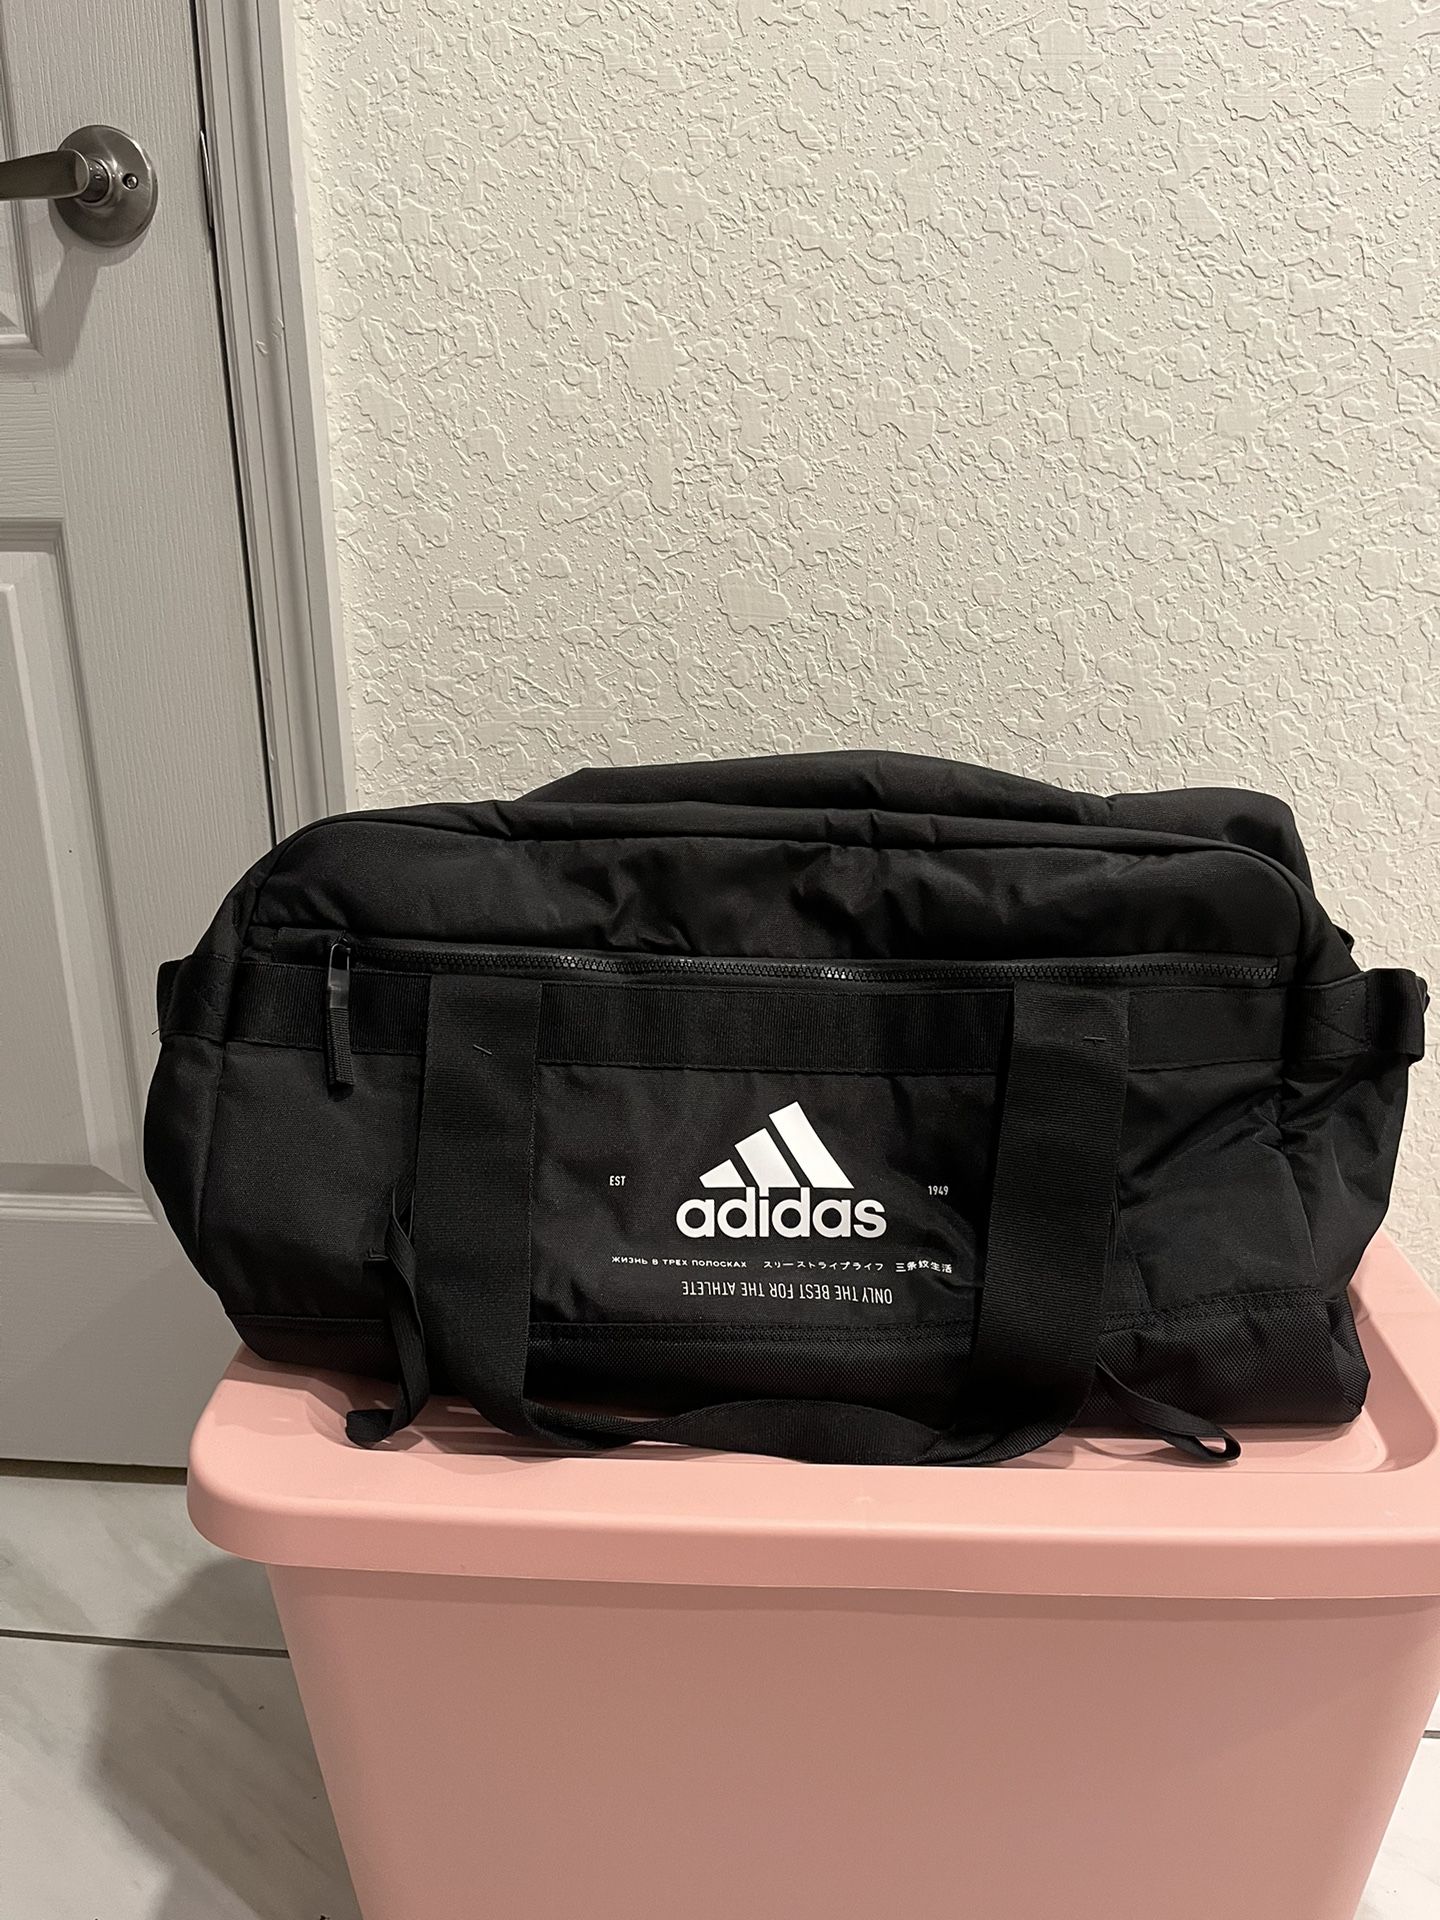 New Adidas Duffle Bag